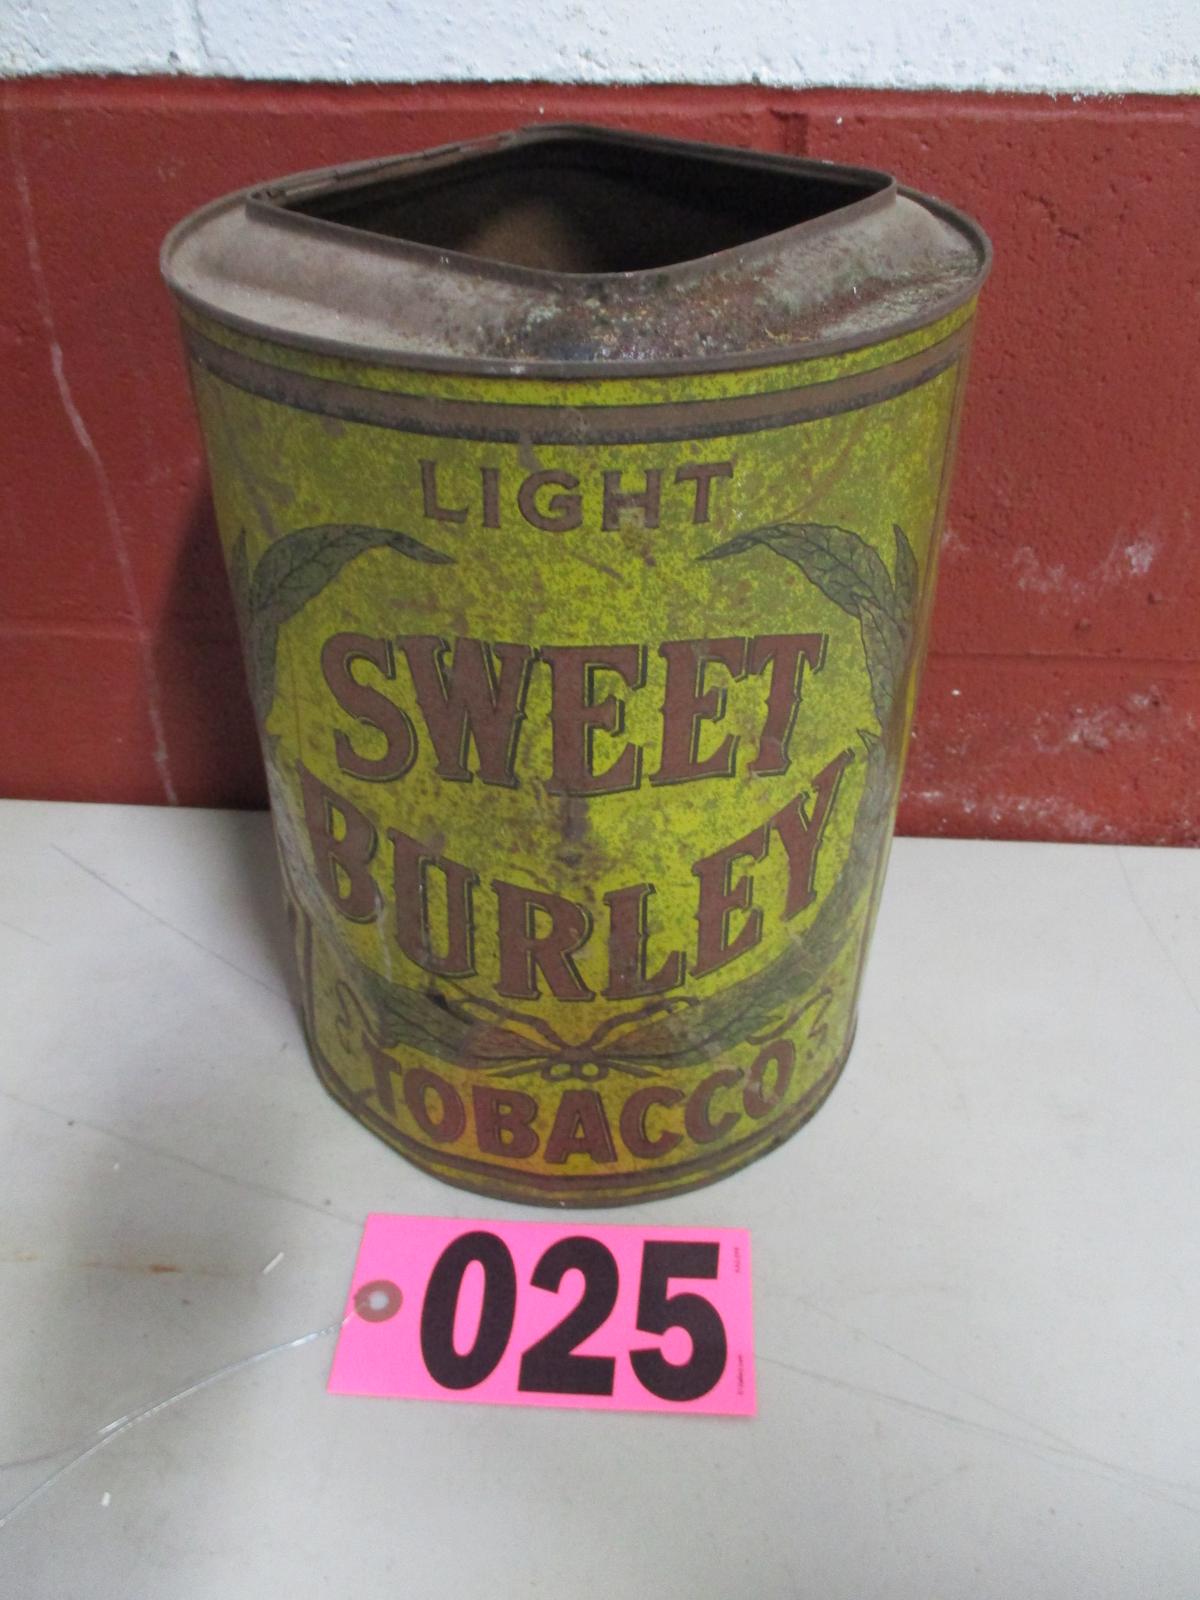 Sweet Burley Tobacco tin